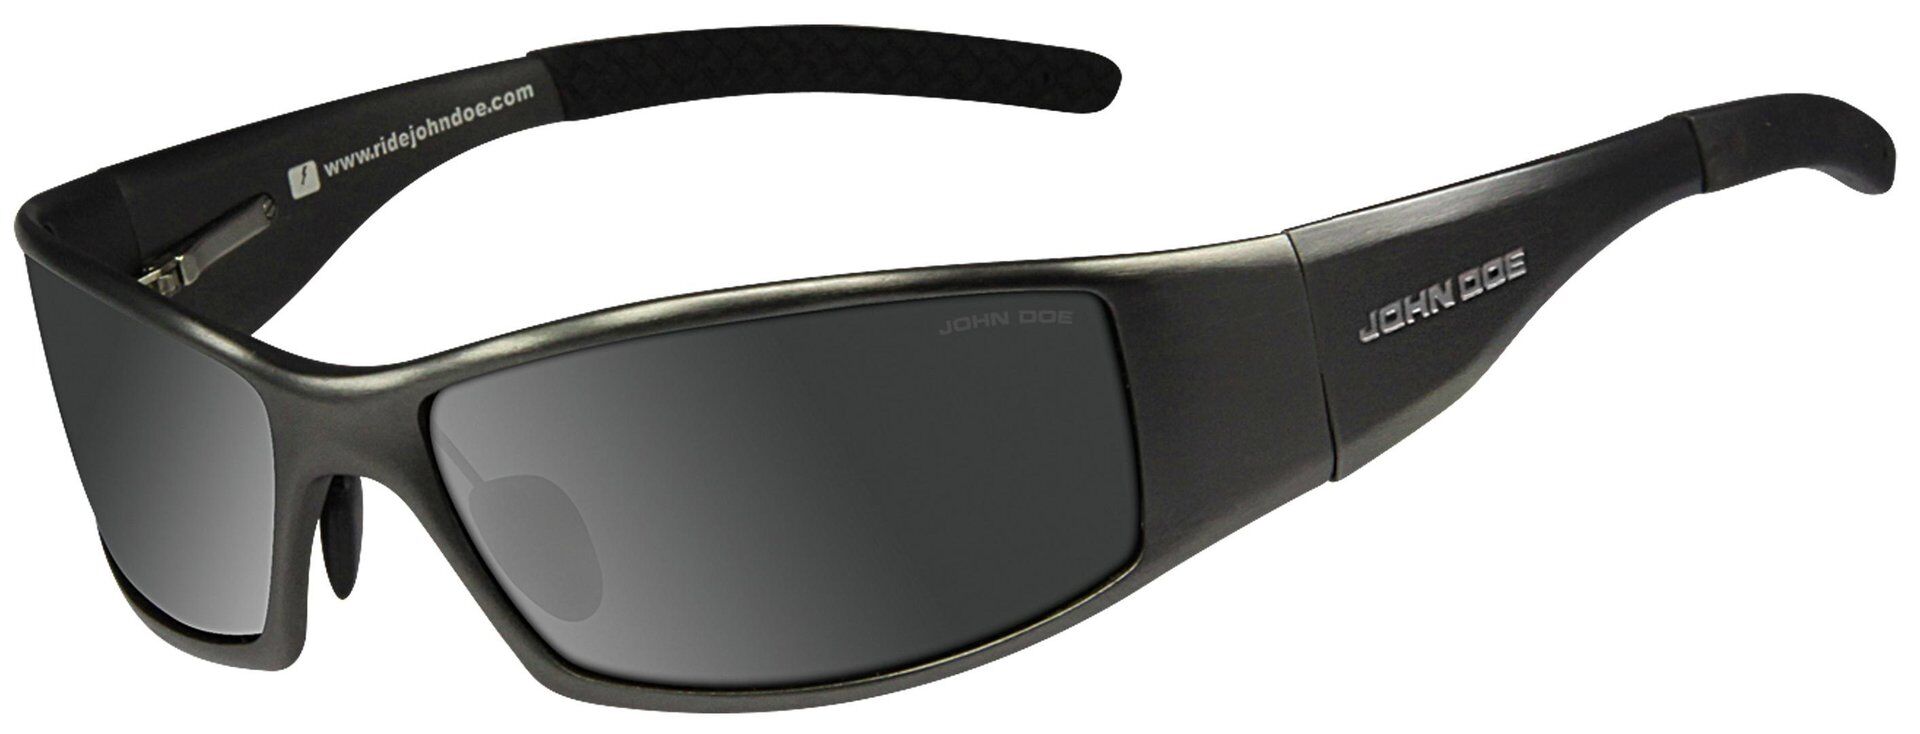 John Doe Titan Glider Sungglasses - Negro (un tamaño)